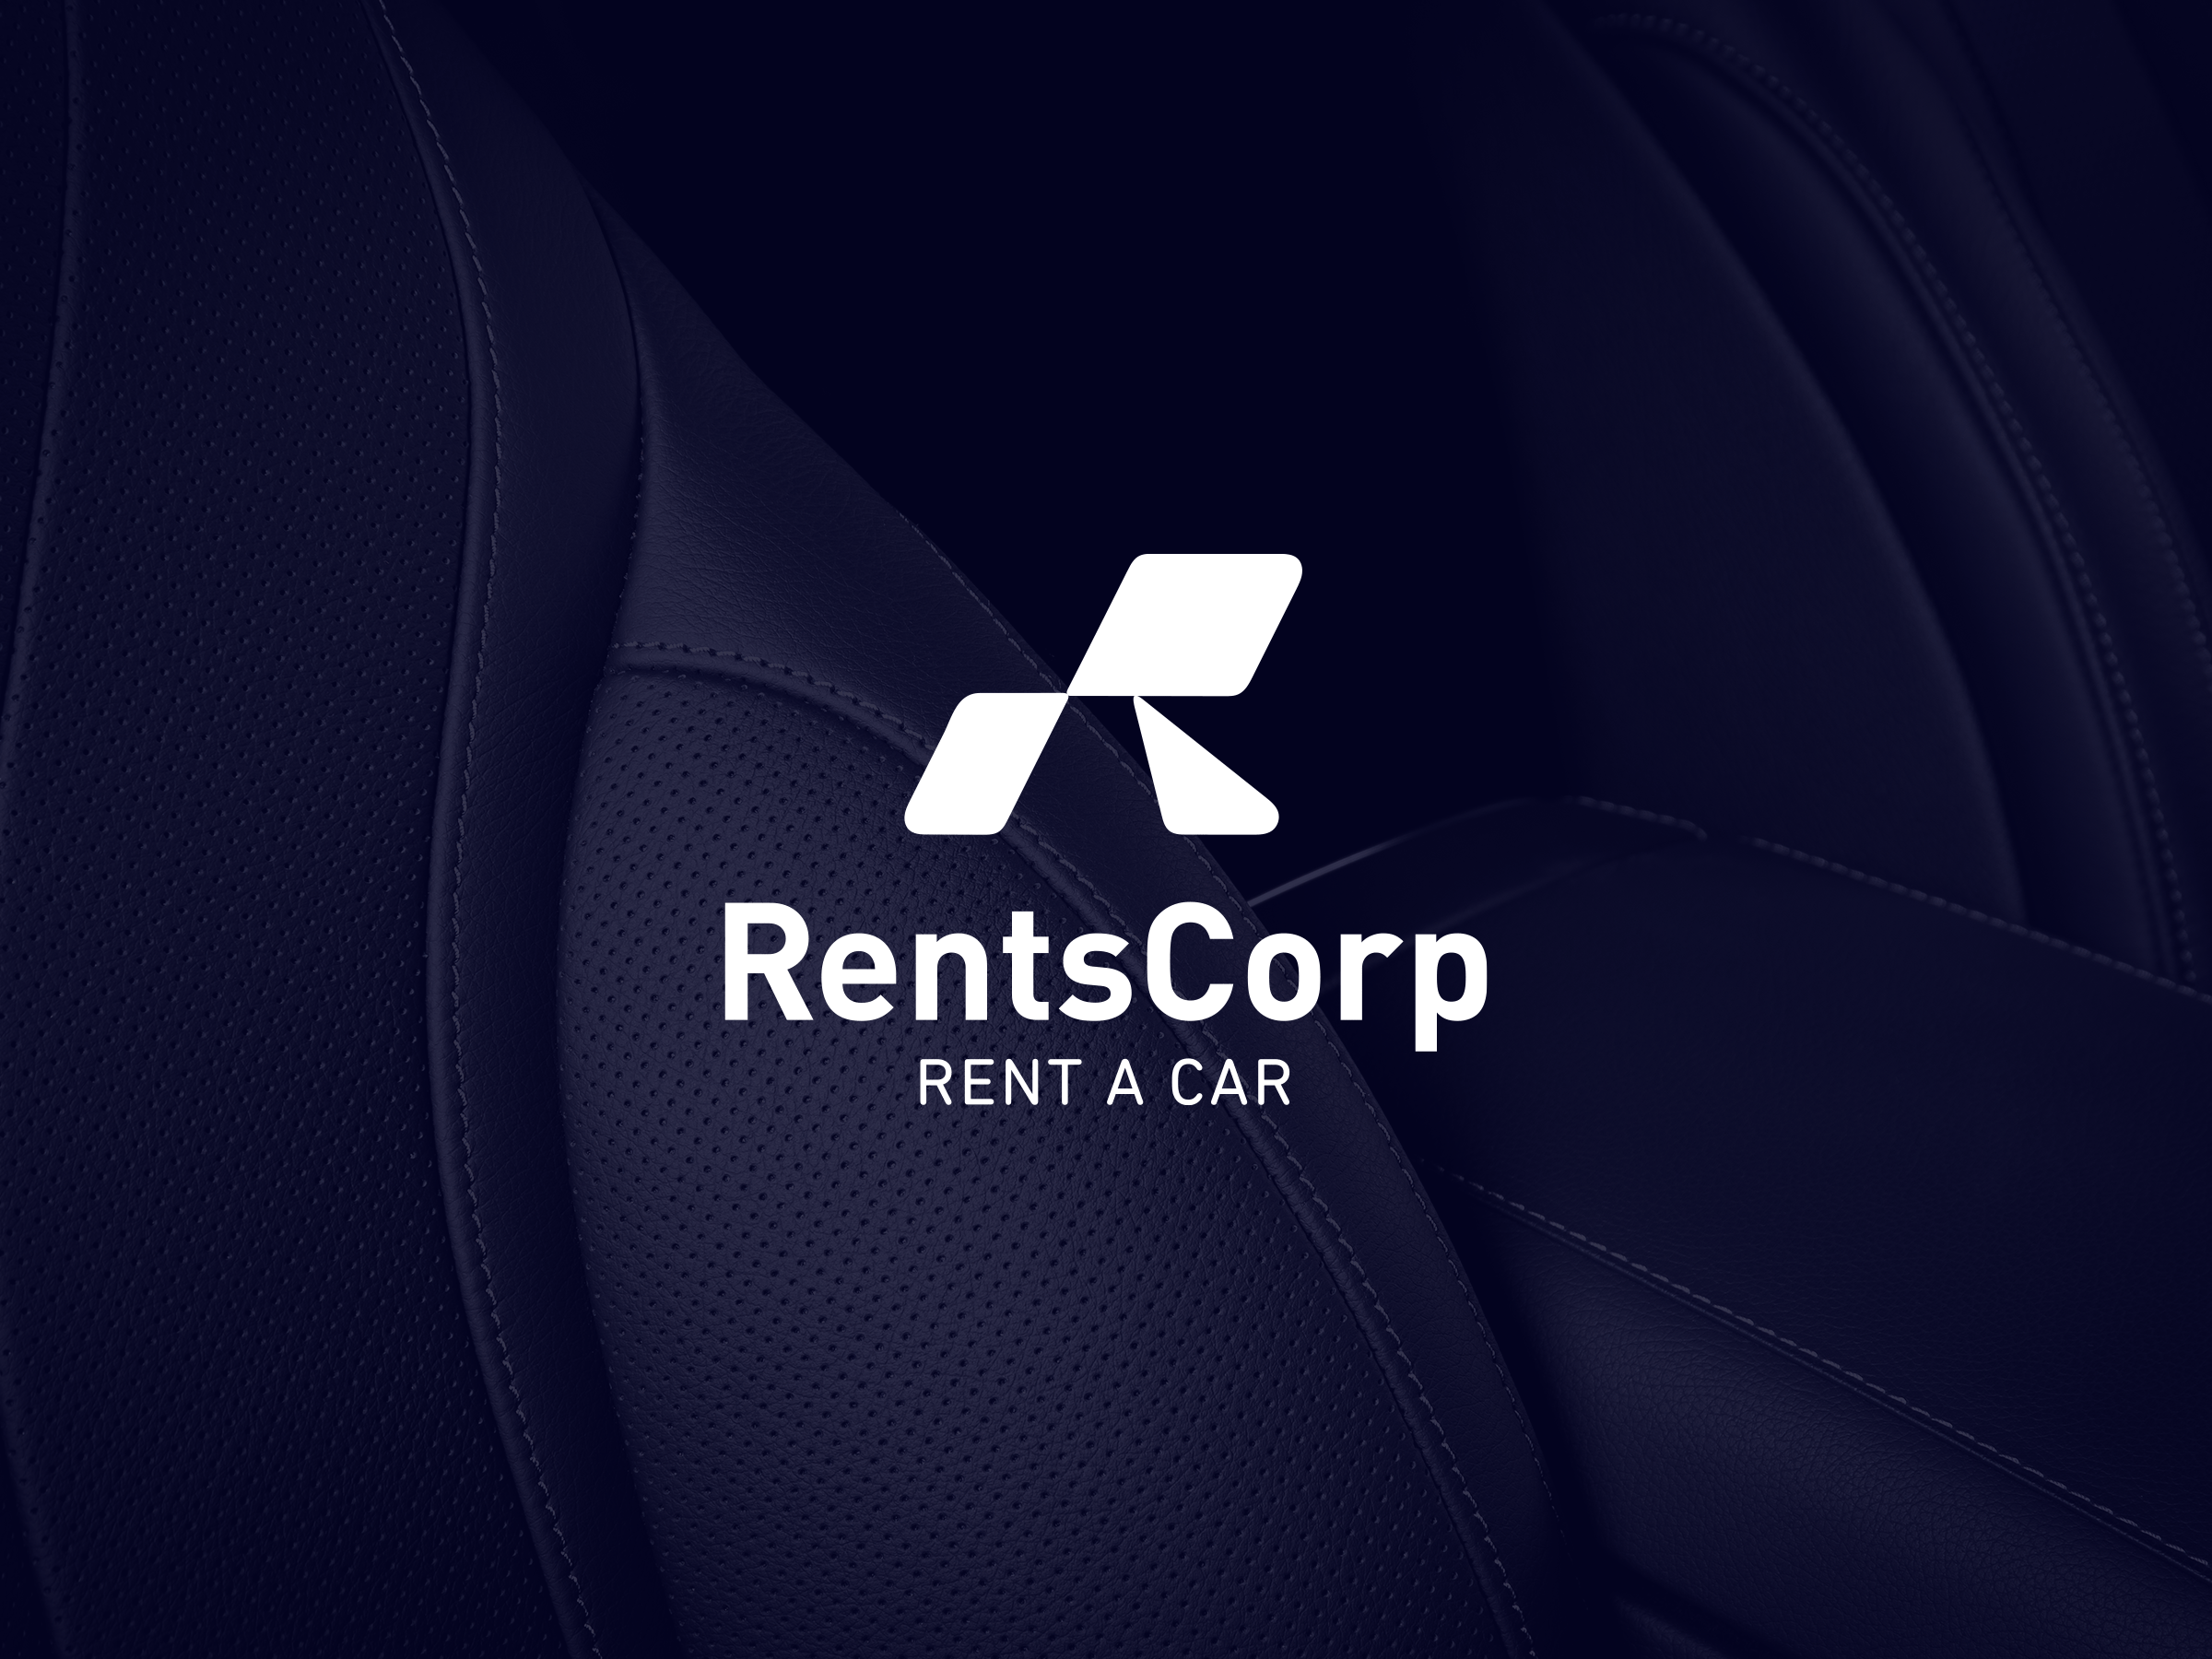 Rents Corp